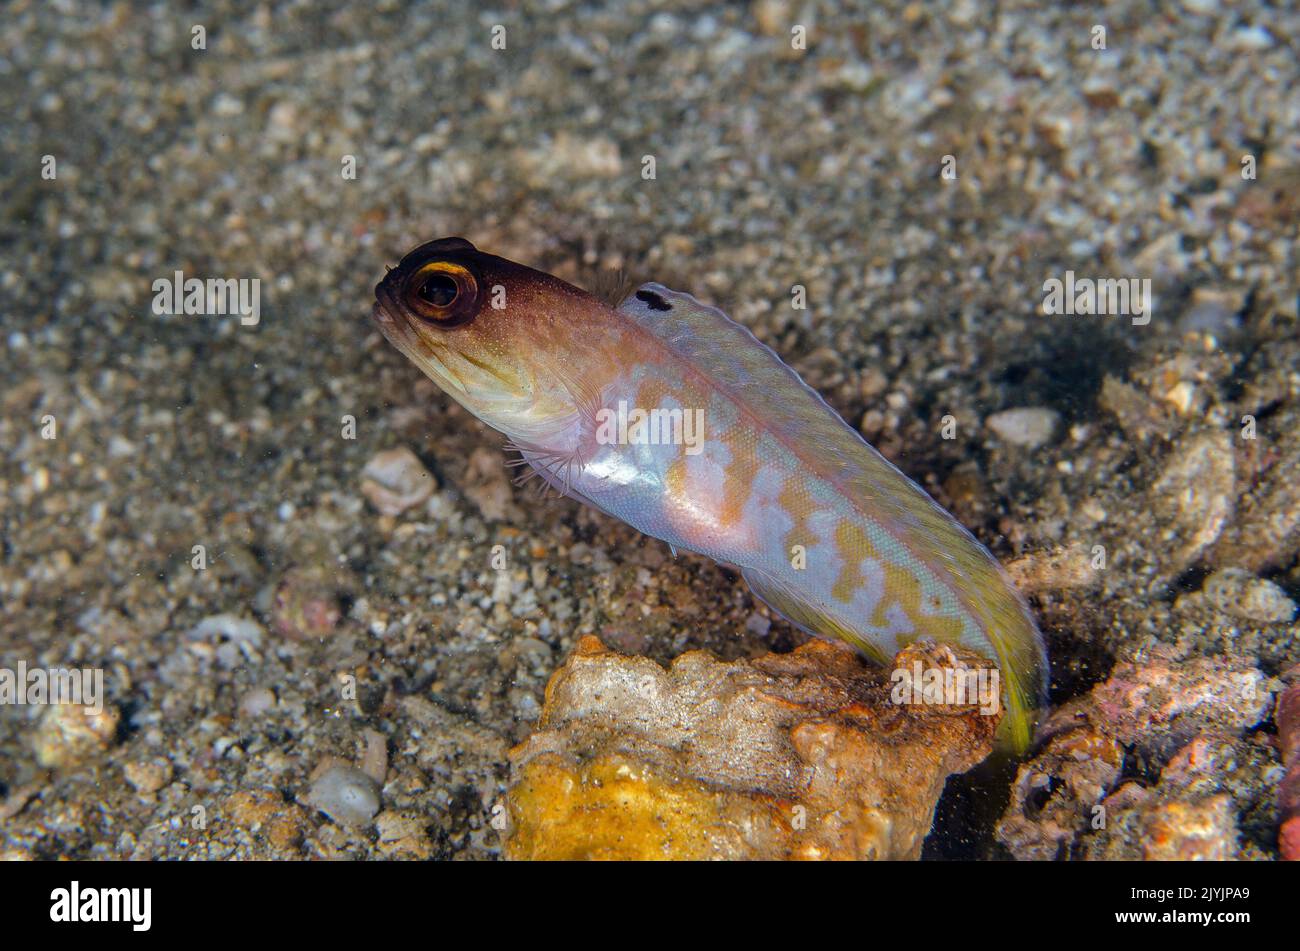 Male of Yelllowbarred Jawfish, Opistognathus sp., Opistognathidae,  Anilao, Philippines, Asia Stock Photo